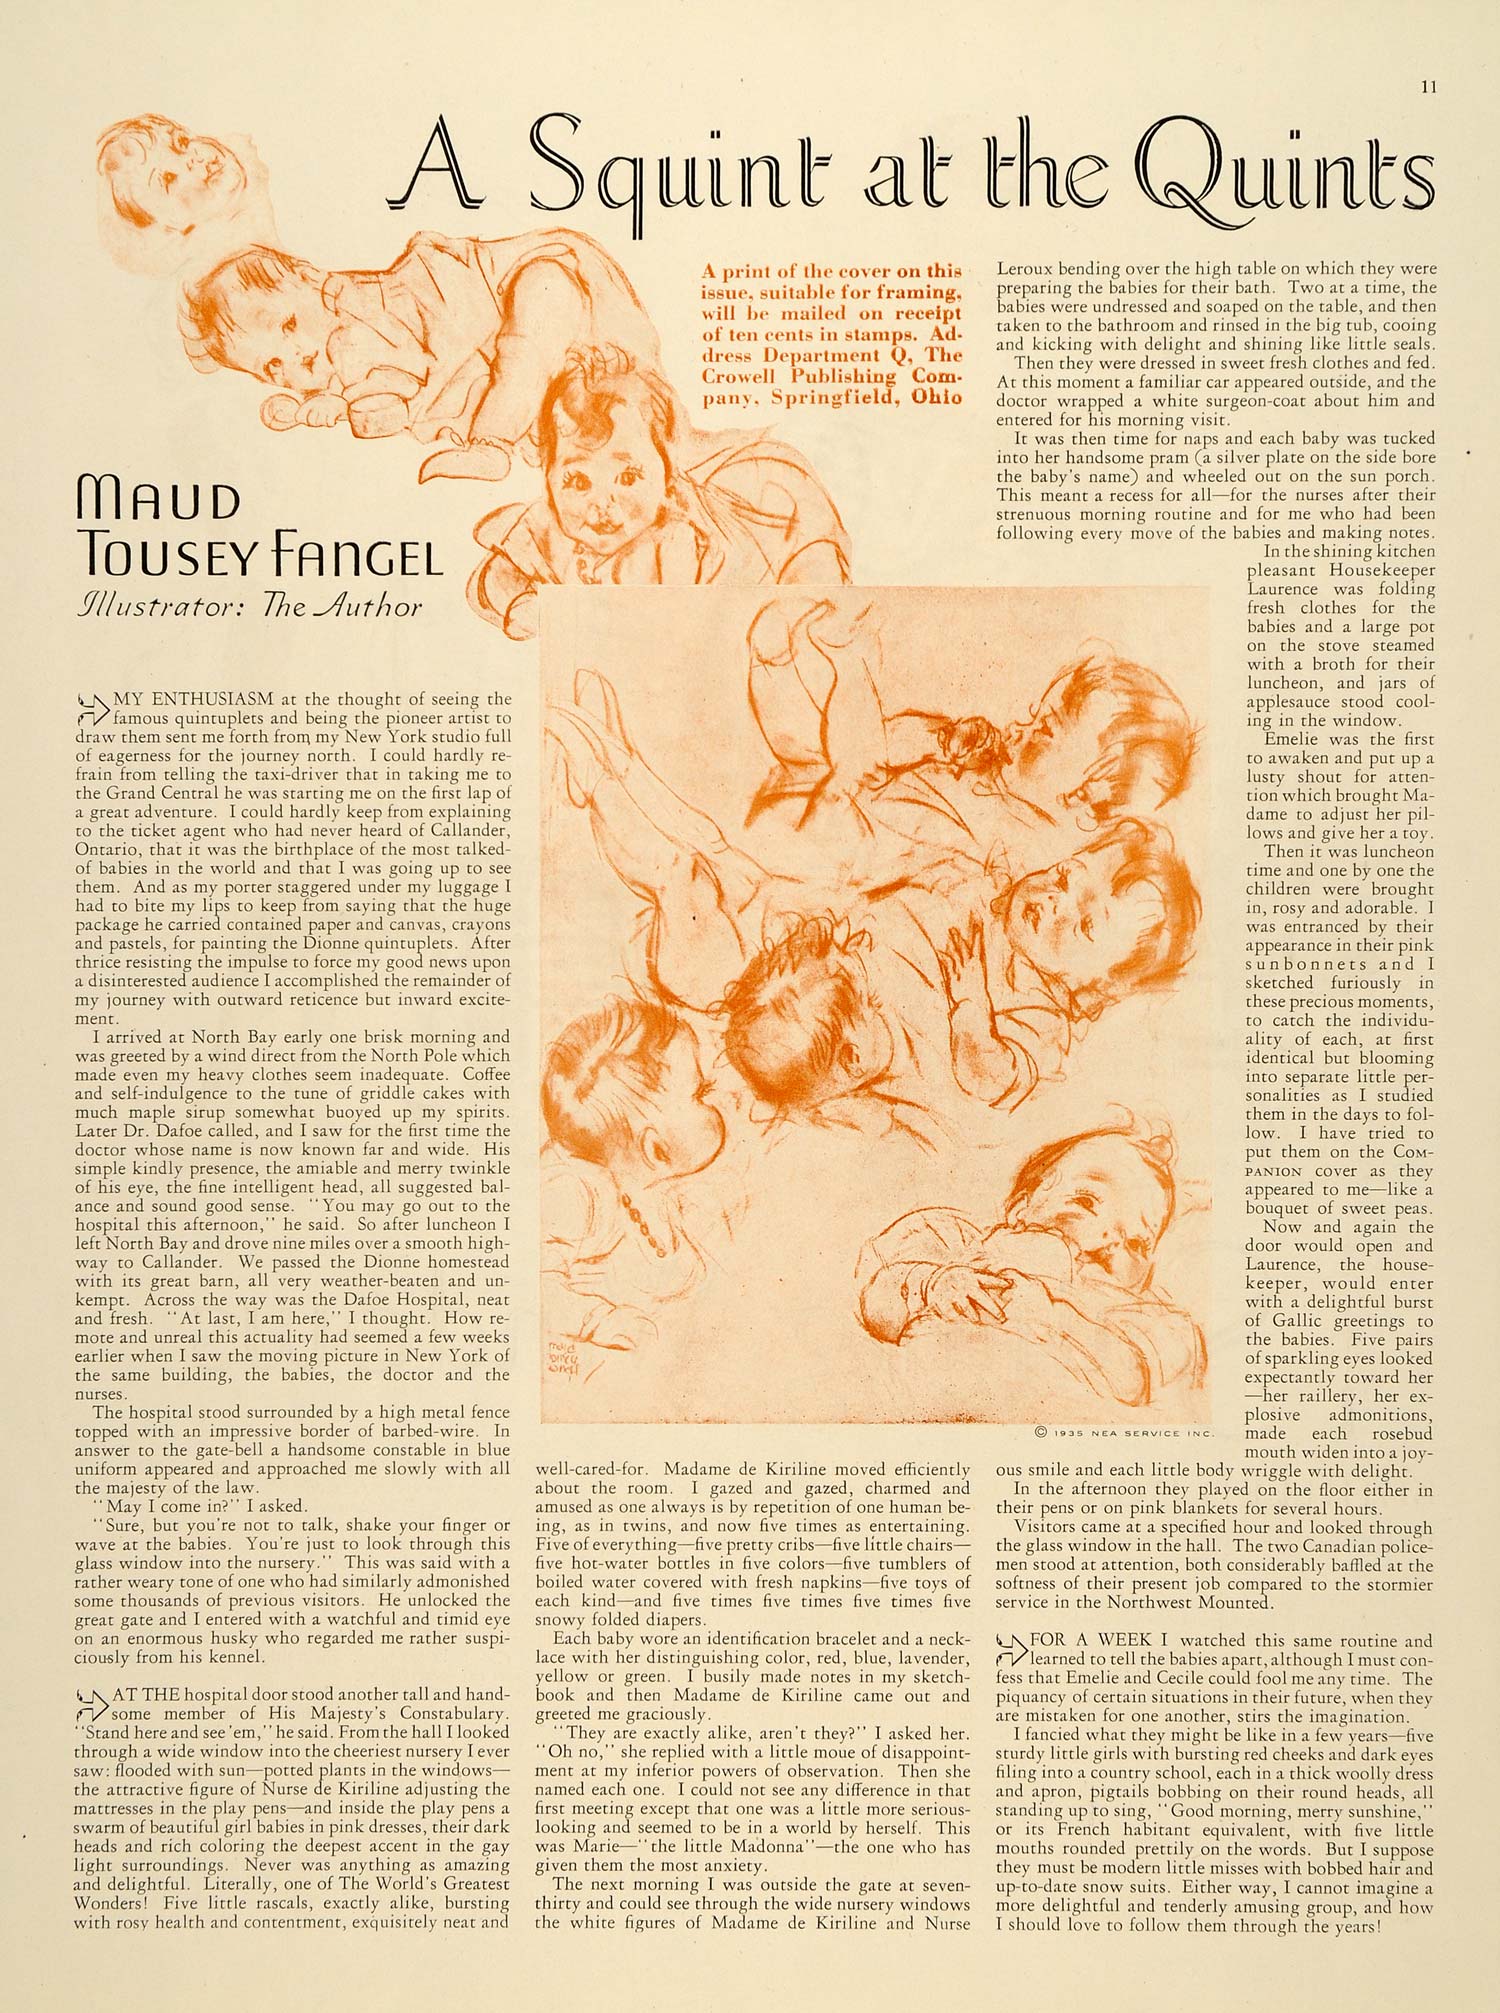 1935 Article Squint at the Quints Maud Tousey Fangel - ORIGINAL WH1